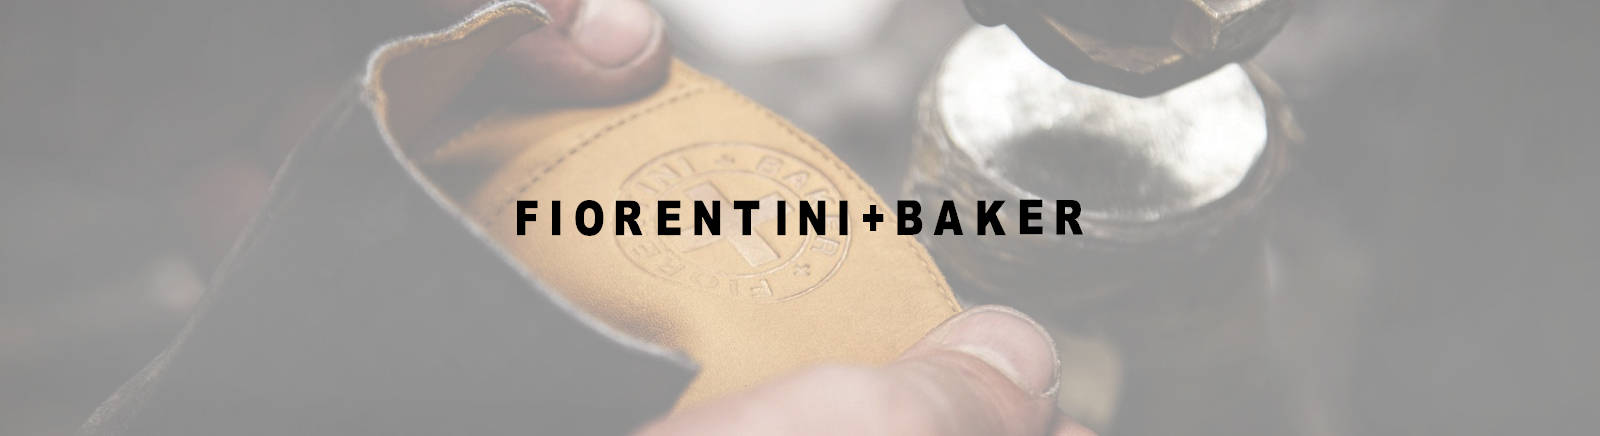 Fiorentini + Baker Herrenschuhe online entdecken im Juppen Shop